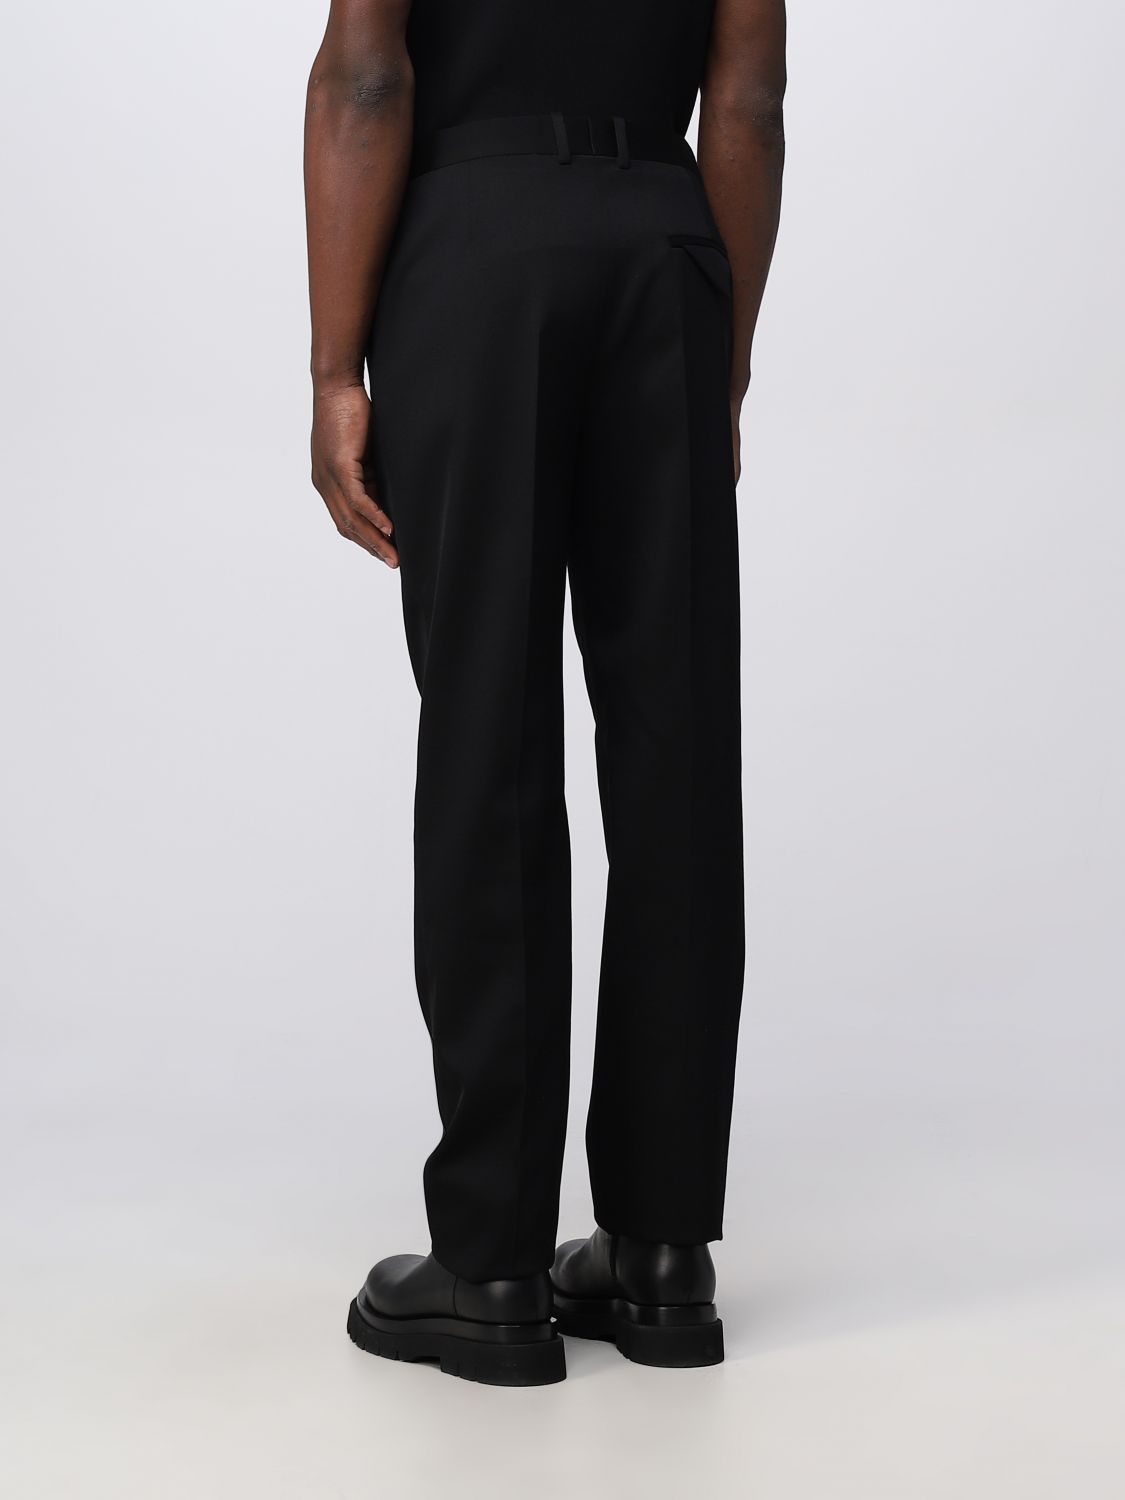 BOTTEGA VENETA: trousers in gabardine - Black | Bottega Veneta